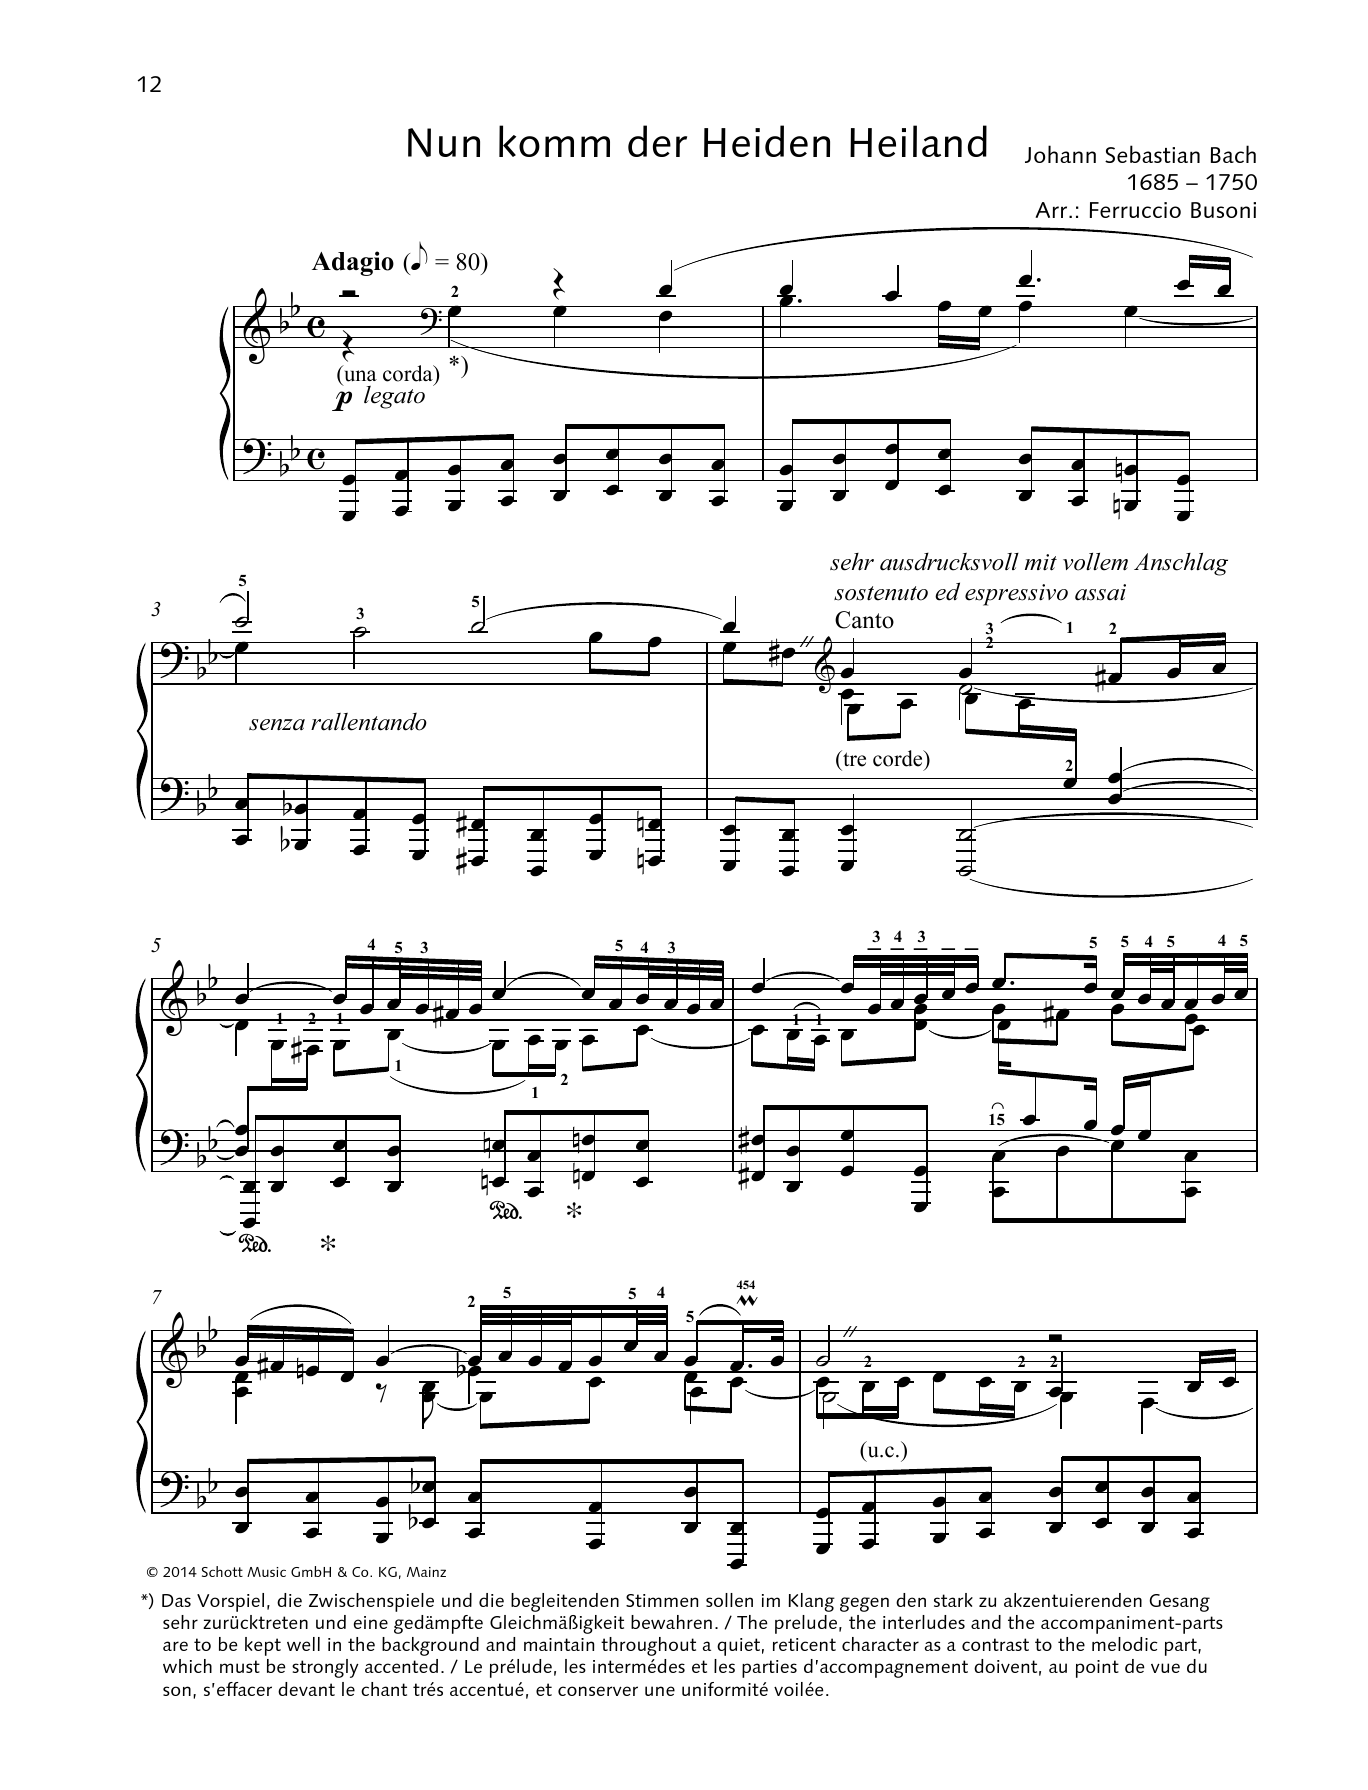 Download Johann Sebastian Bach Nun komm der Heiden Heiland Sheet Music and learn how to play Piano Solo PDF digital score in minutes